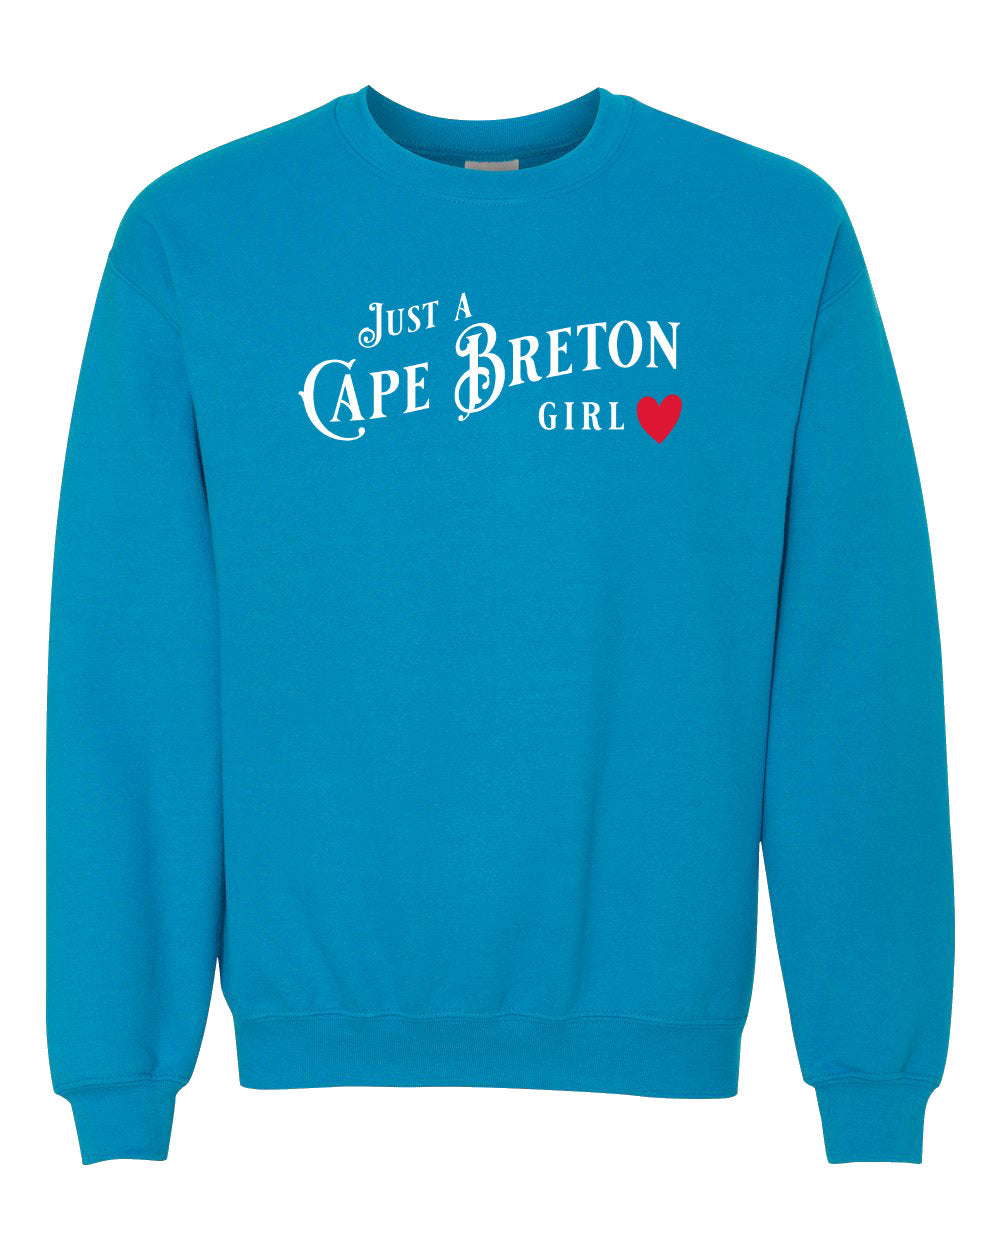 Just a Cape Breton Girl Sweatshirt